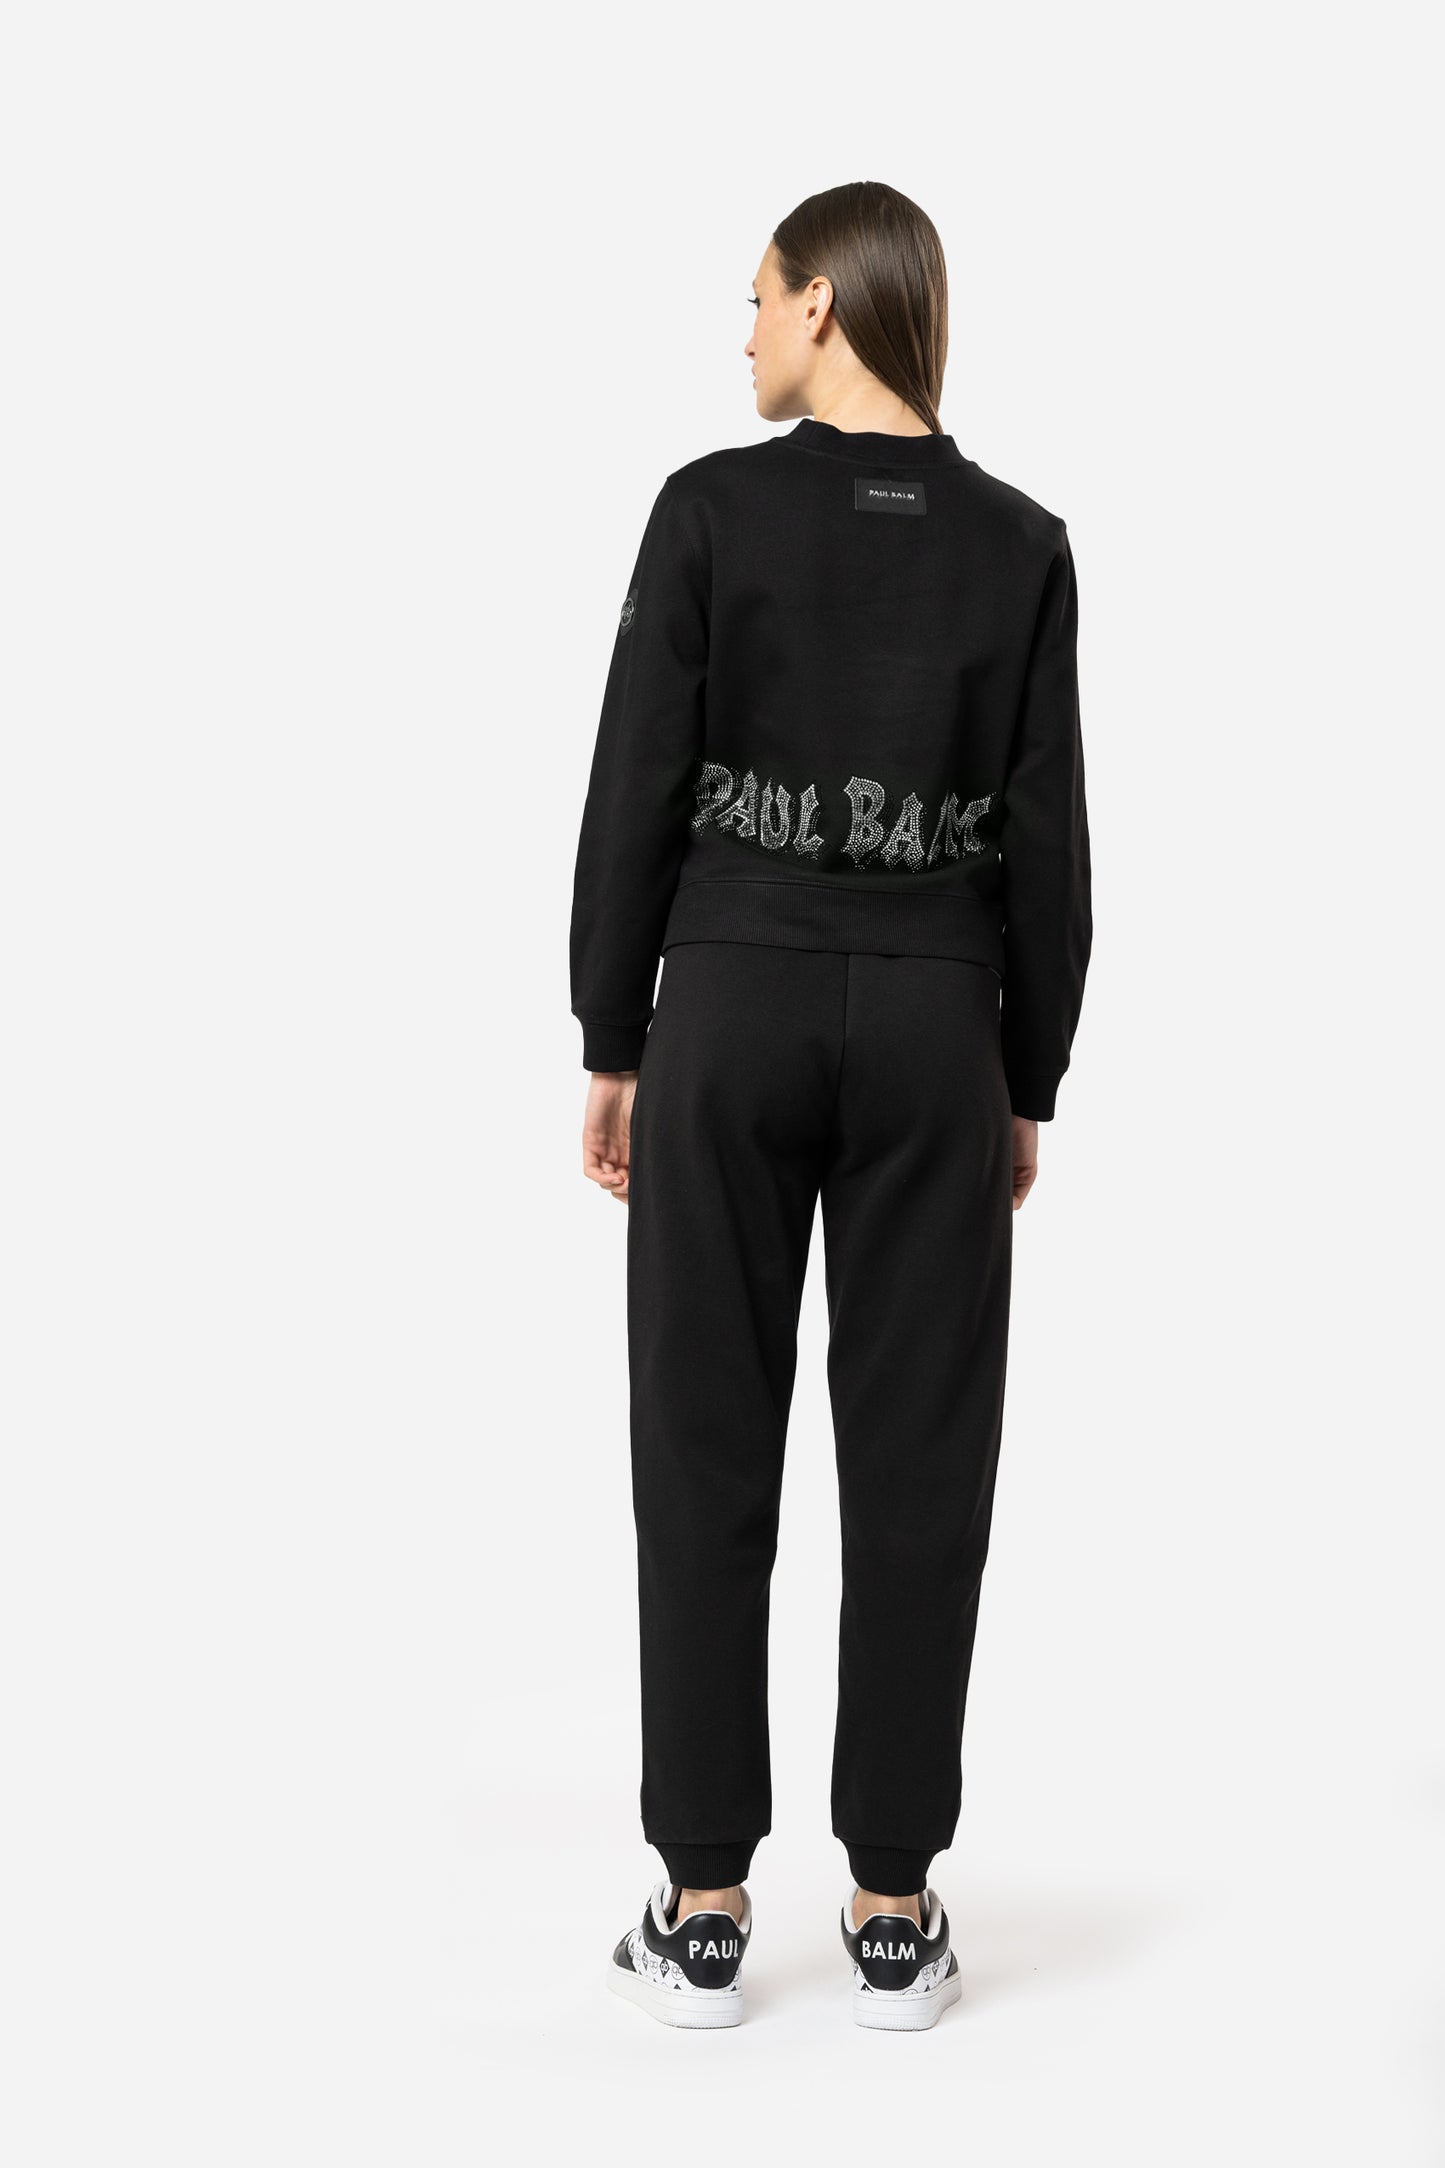 Crystal Black Kanye Sweatshirt - Limited to 300